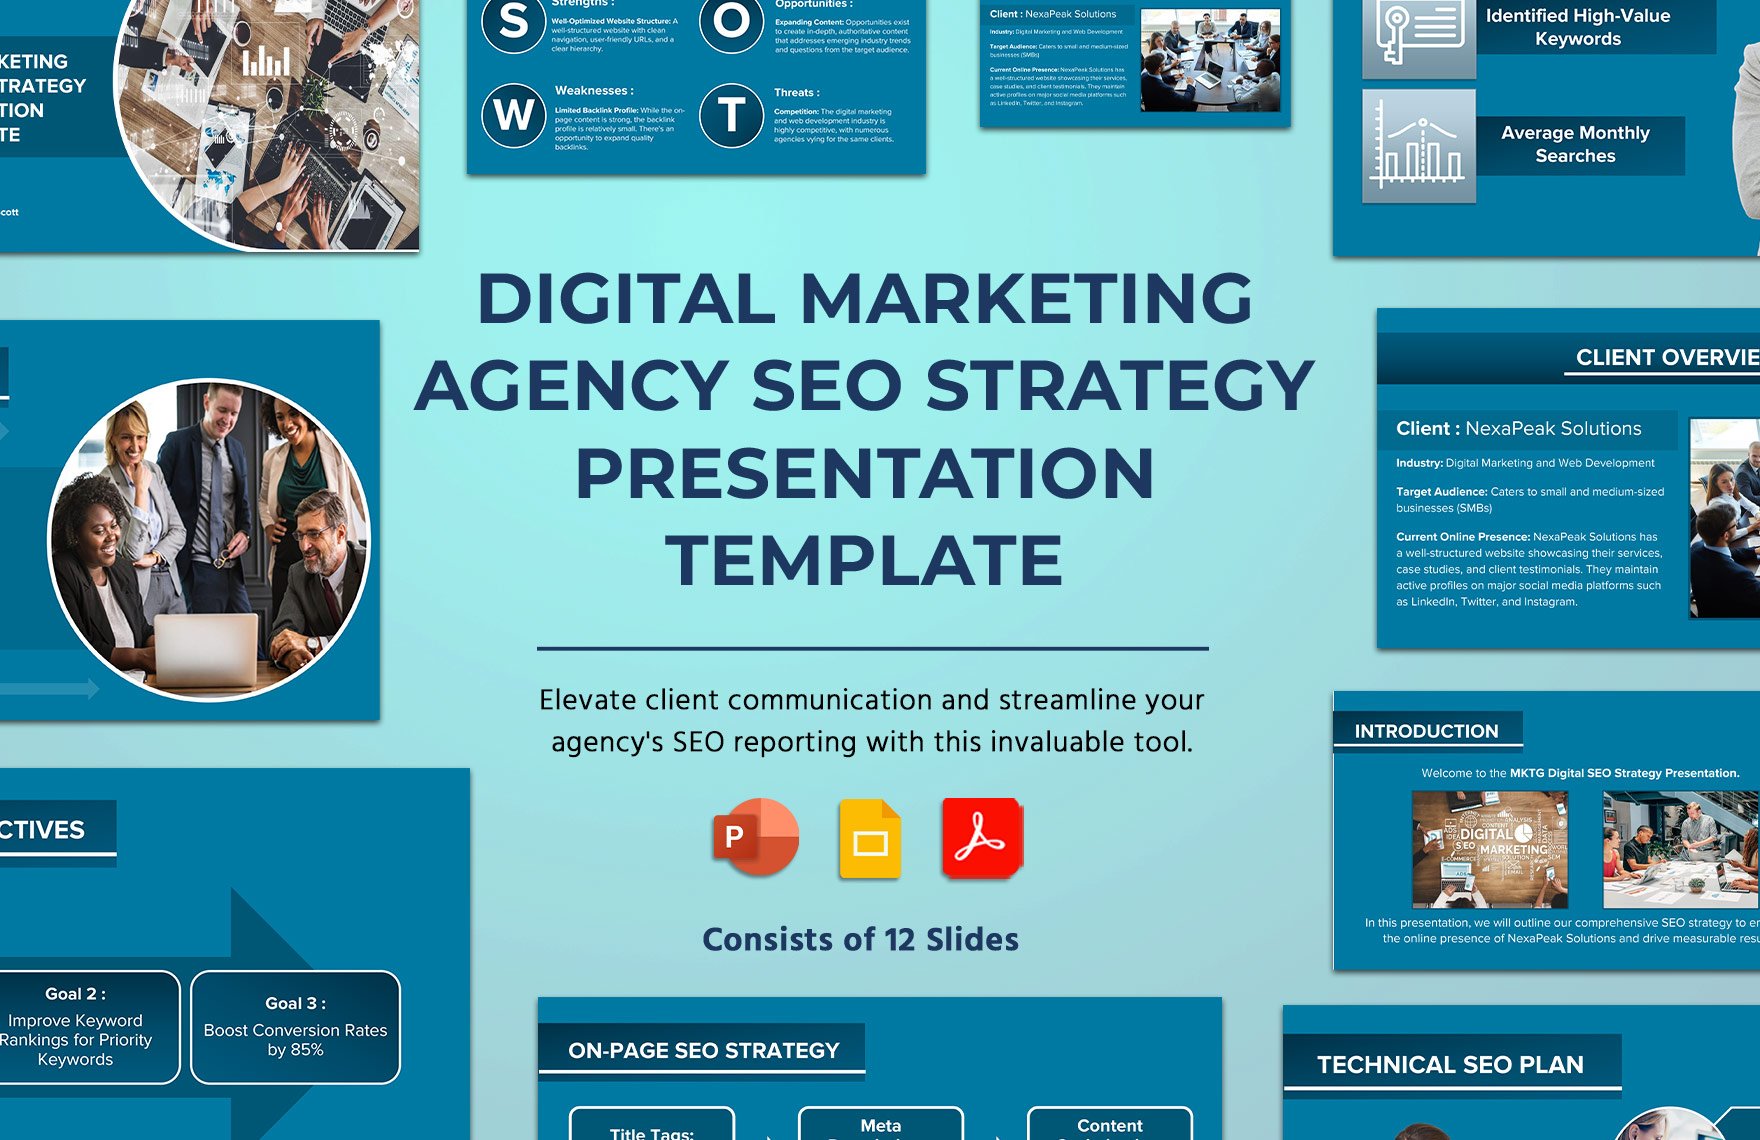 Digital Marketing Agency SEO Strategy Presentation Template